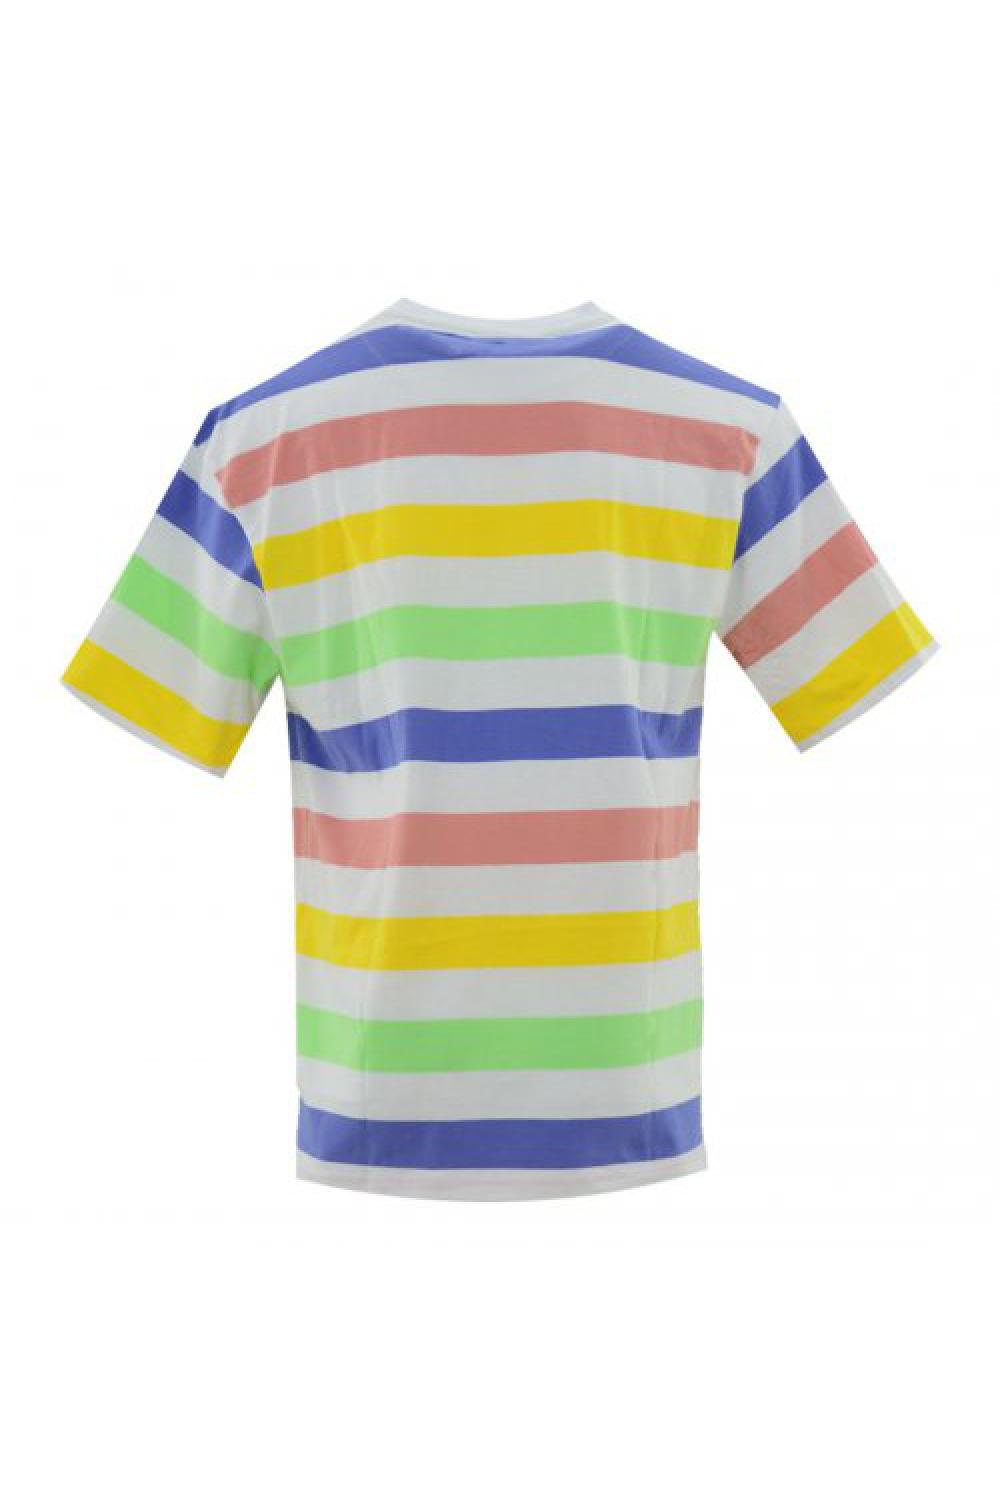 KARL KANI T-shirt Originals Stripe Unisex - Mint - Light Rose - Yellow (KM221-027-2)